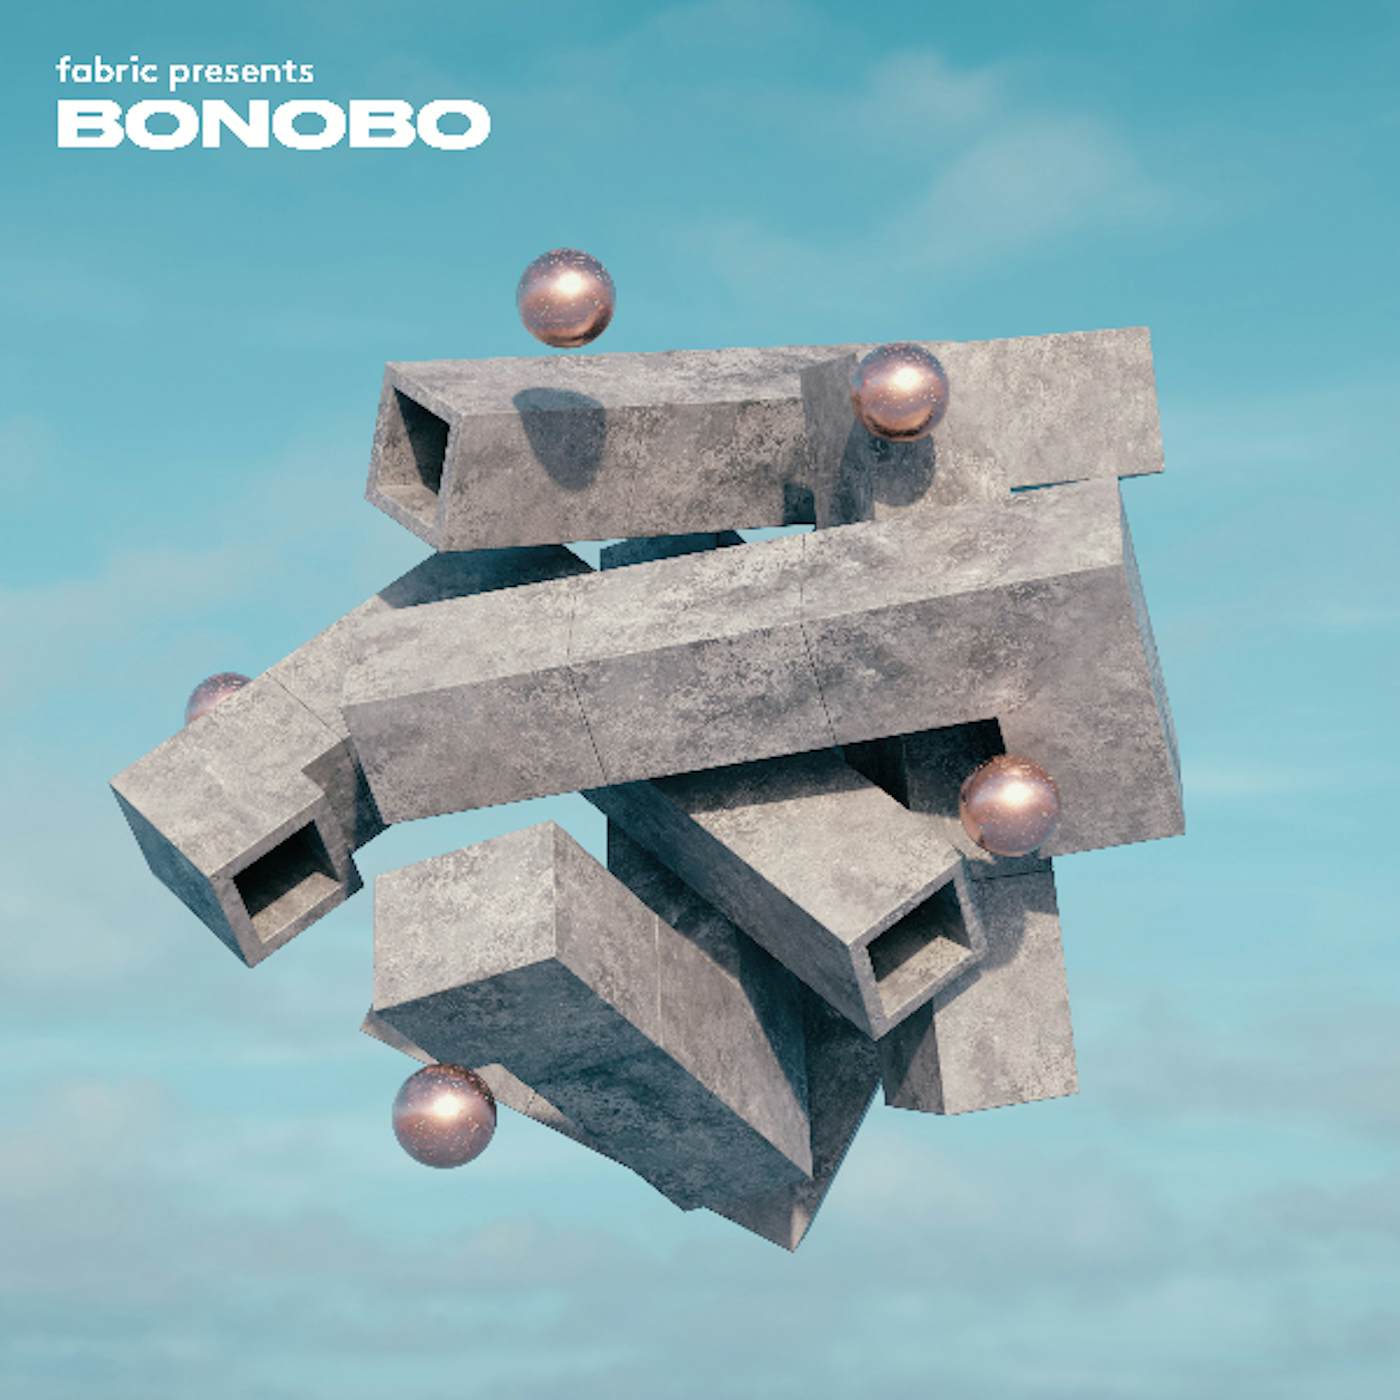 fabric presents Bonobo Vinyl Record